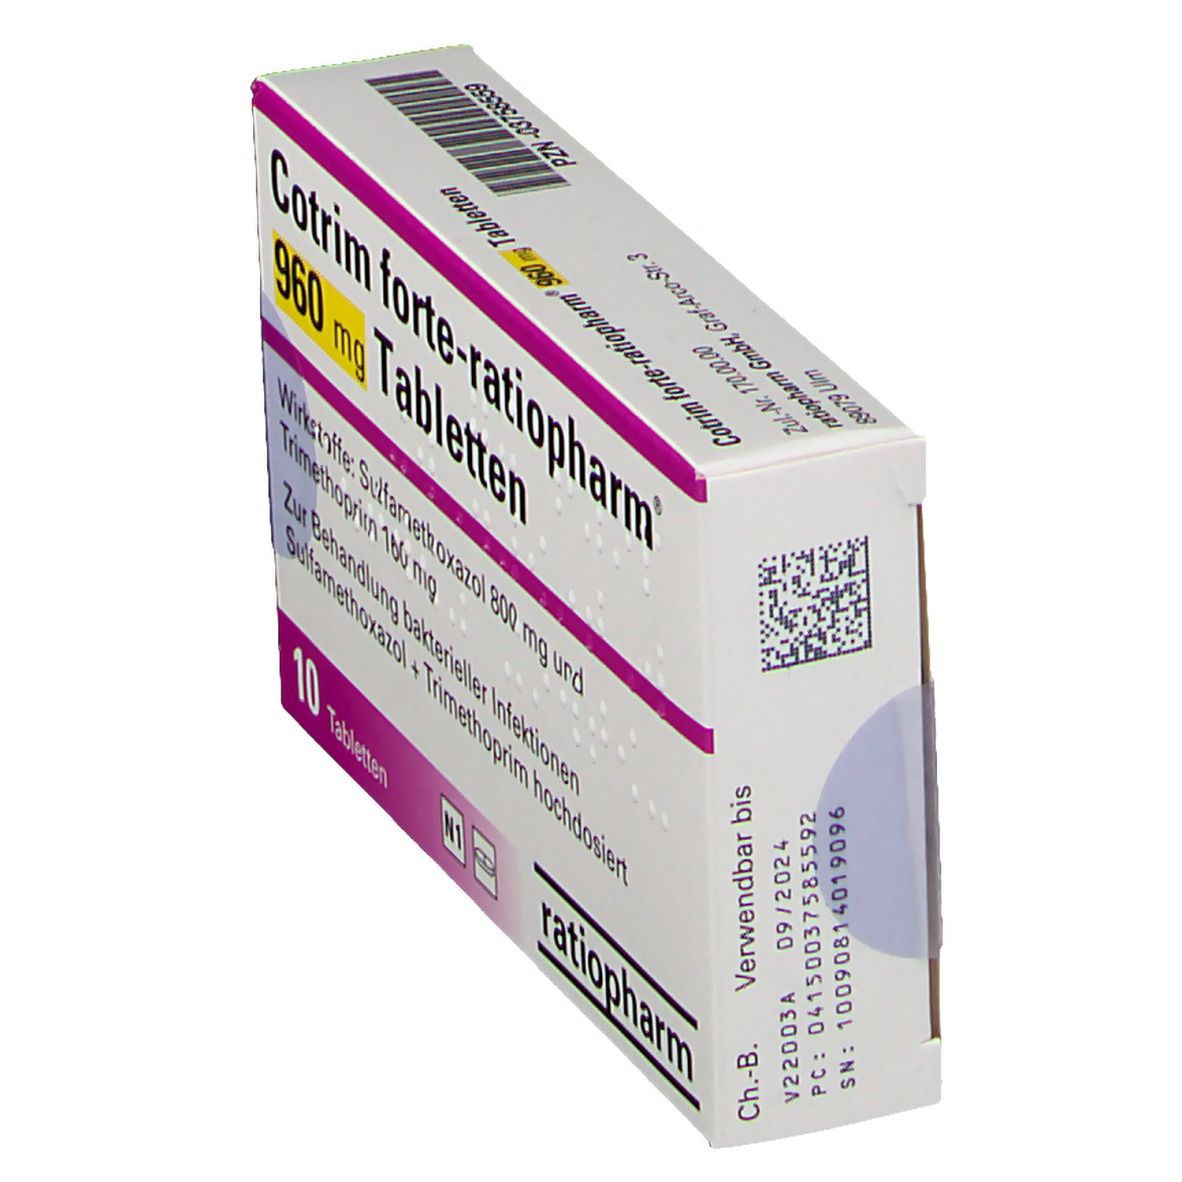 Cotrim forte-ratiopharm® 960 mg